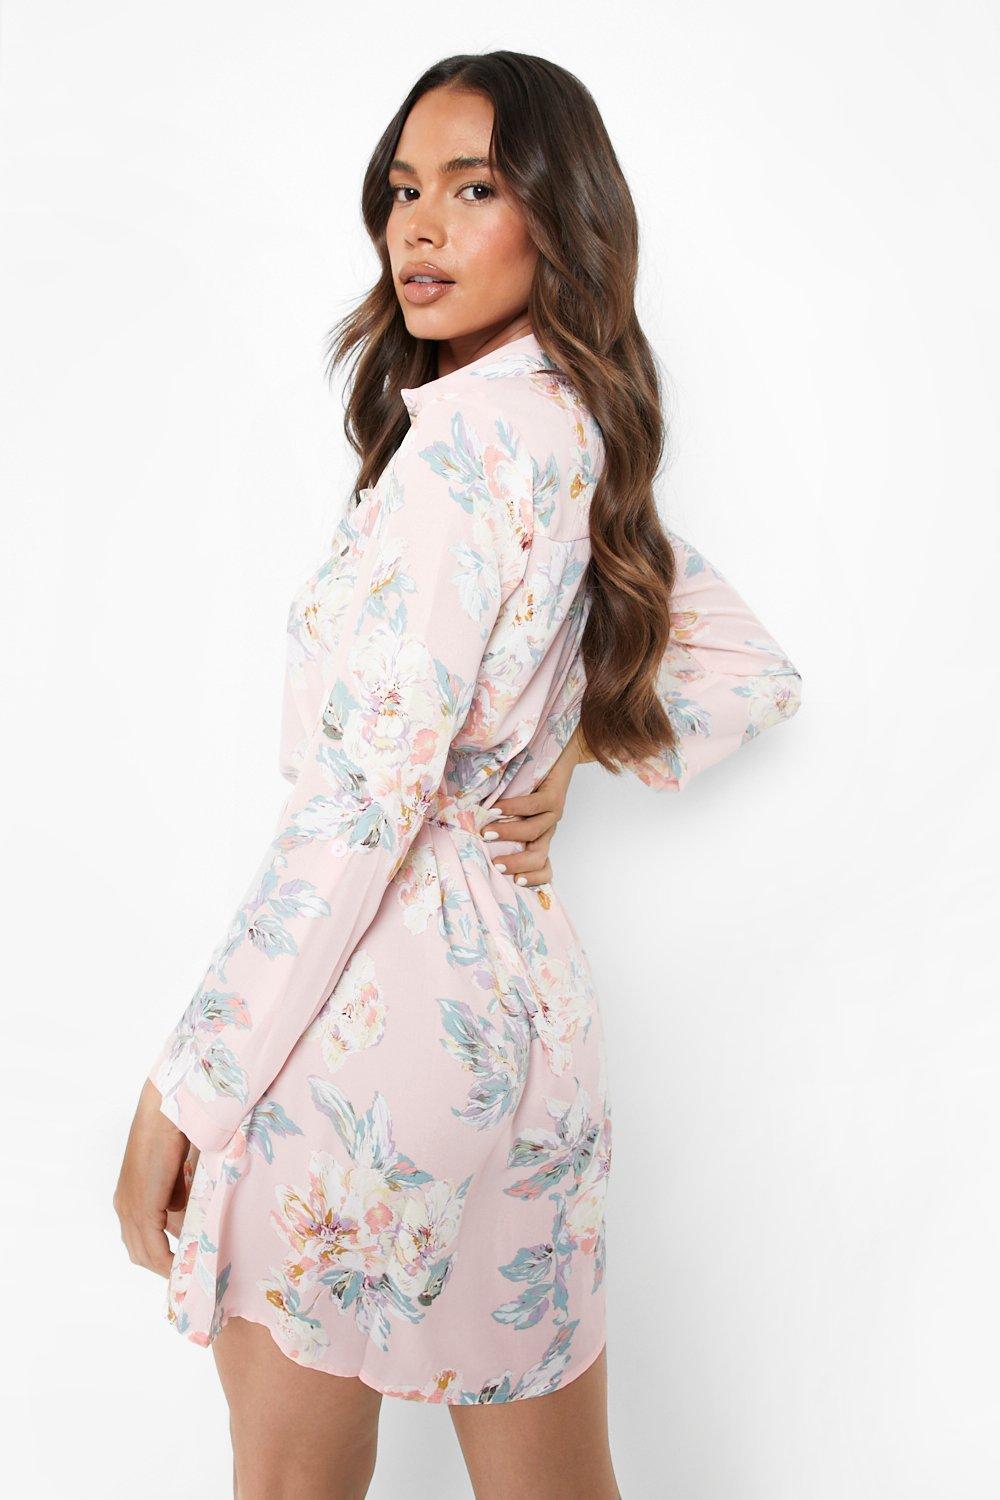 Boohoo Womens Savannah Floral Shirt Dress | eBay